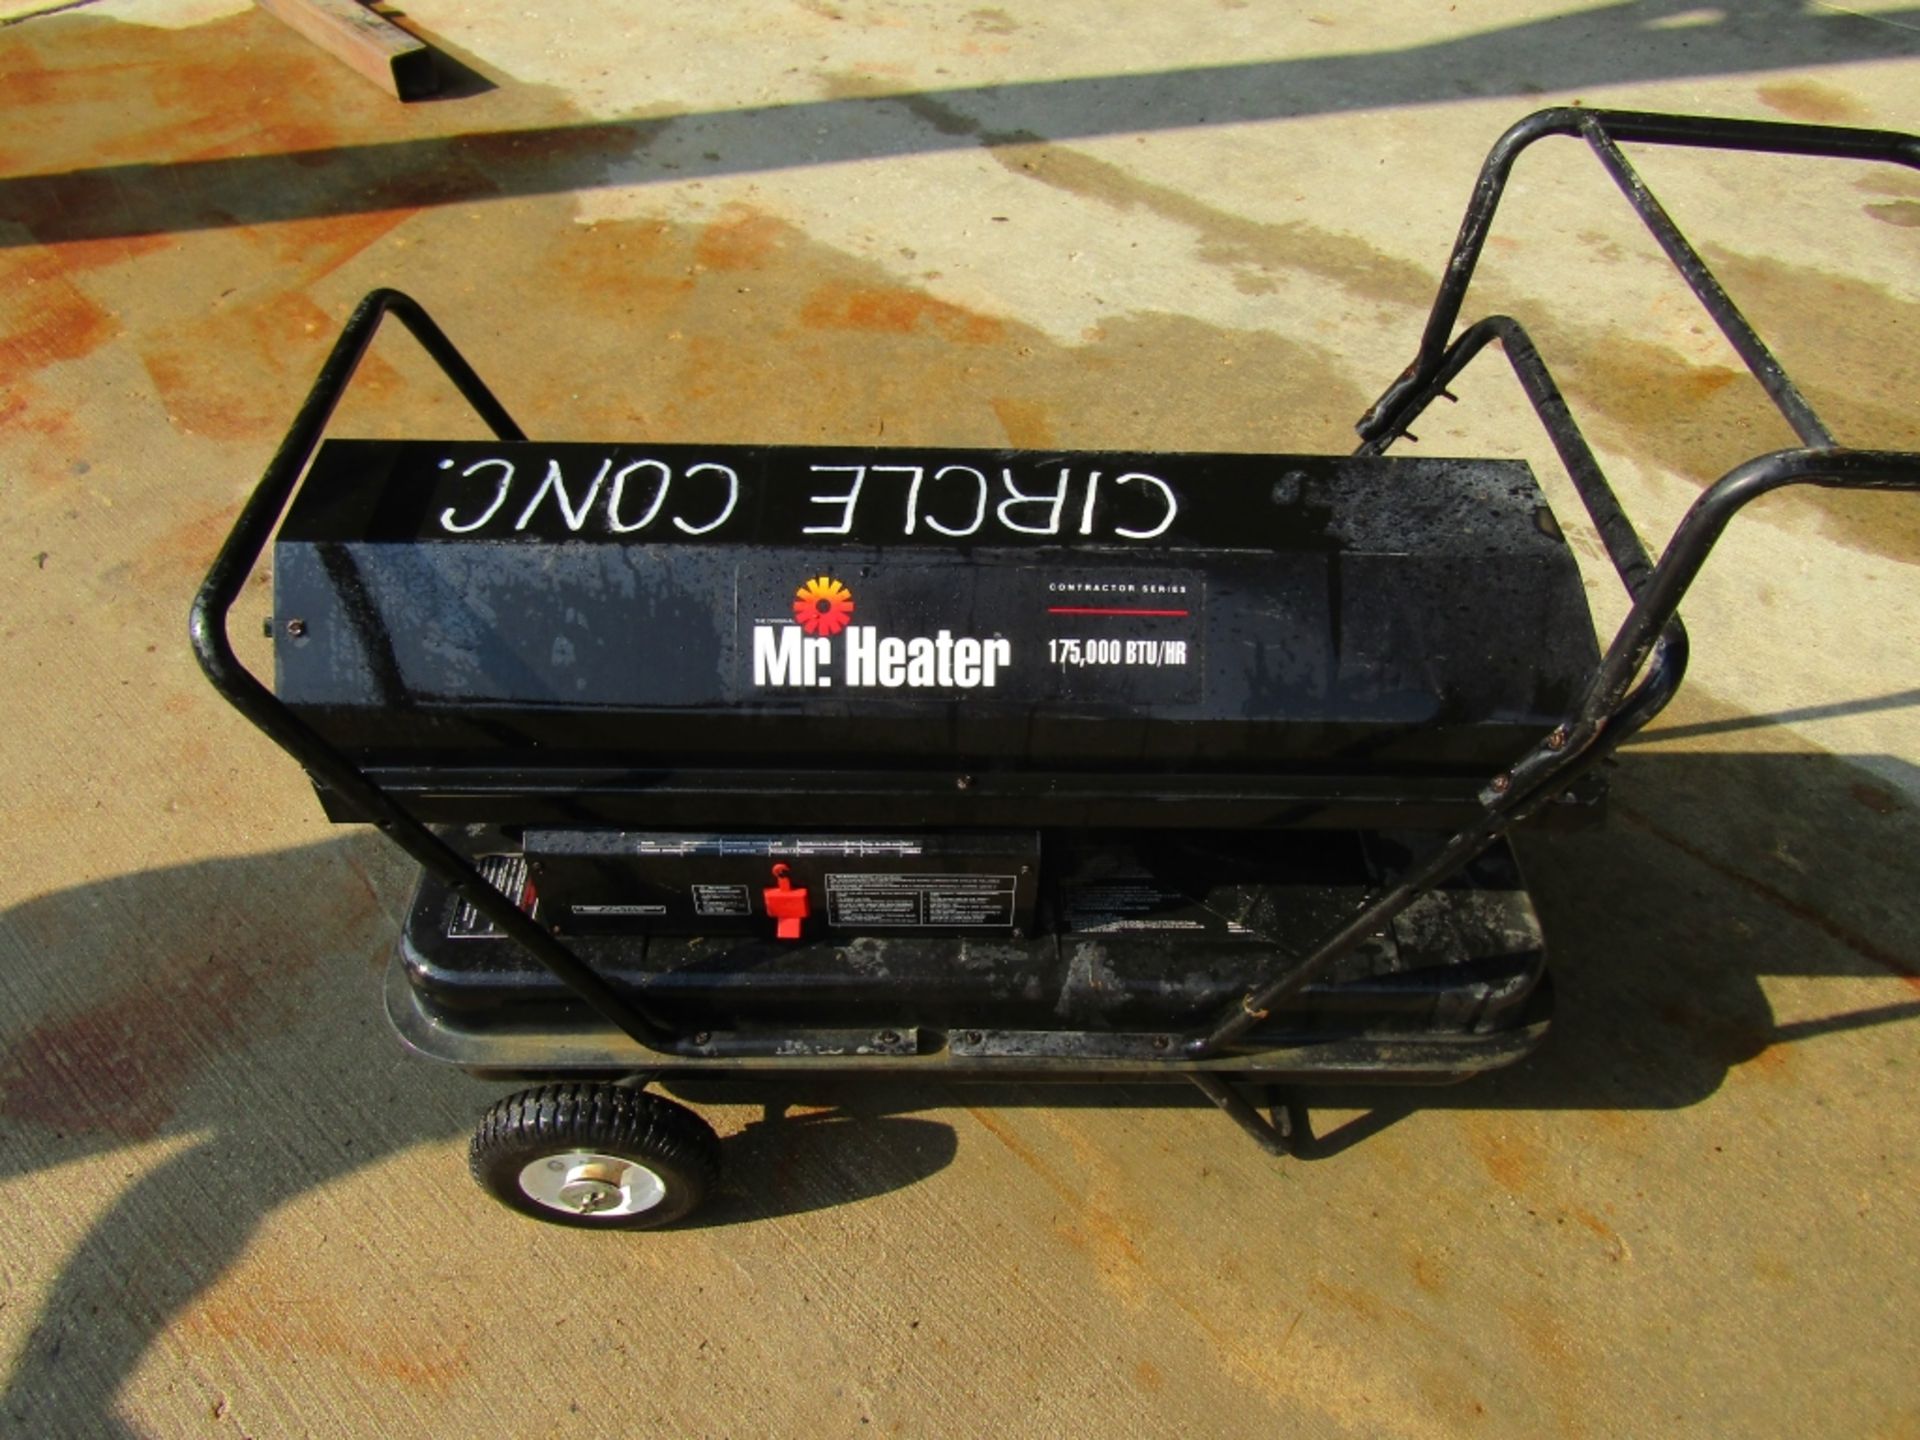 Mr. Heater Portable Heater, 175000 BTU/HR,